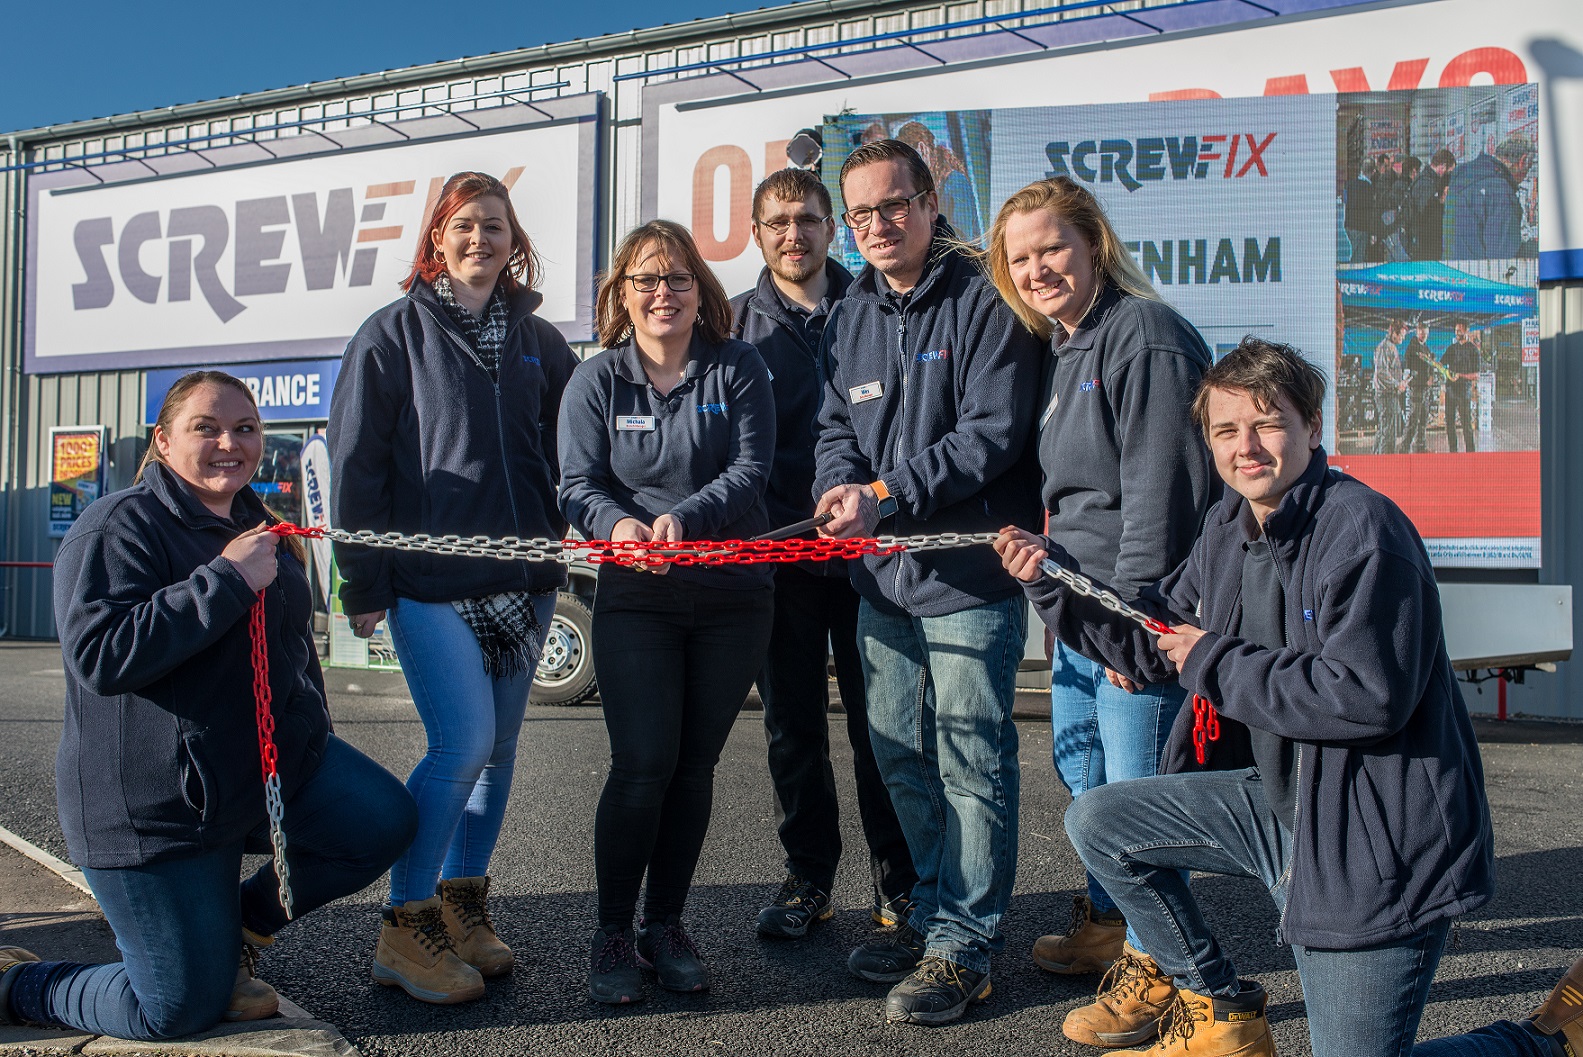 Screwfix opens its doors in Fakenham